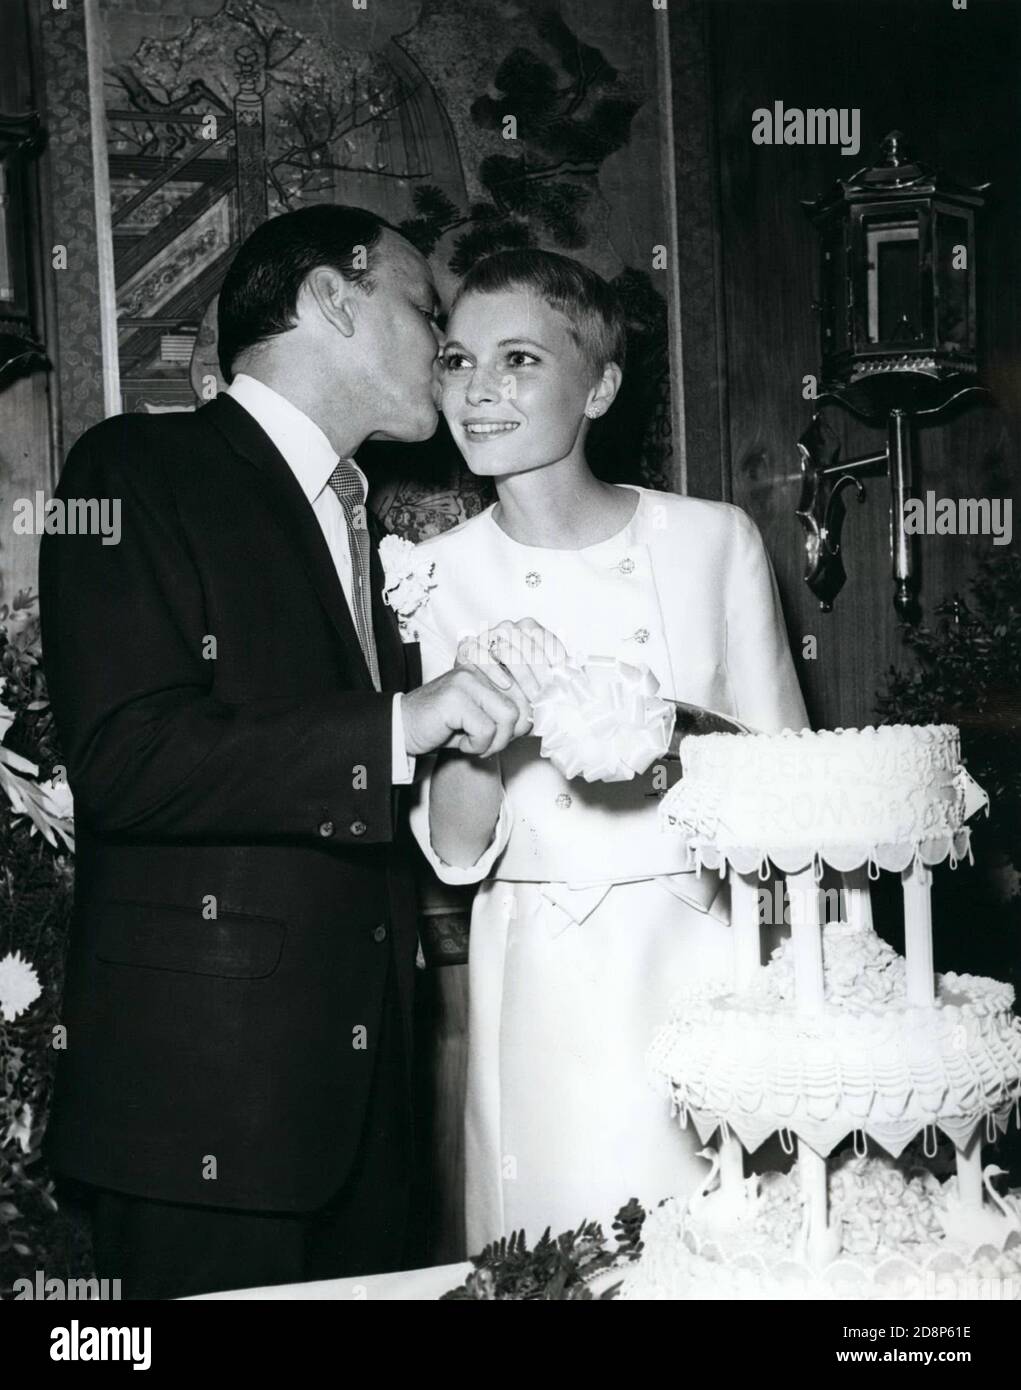 19 luglio 1966 - Las Vegas, Nevada - FRANK SINATRA, 50, a sinistra, dà la sua nuova sposa, mia FARROW, 21, un bacio come hanno tagliato la torta al loro matrimonio. (Credit Image: © Keystone Press Agency/Keystone USA via ZUMAPRESS.com) Foto Stock